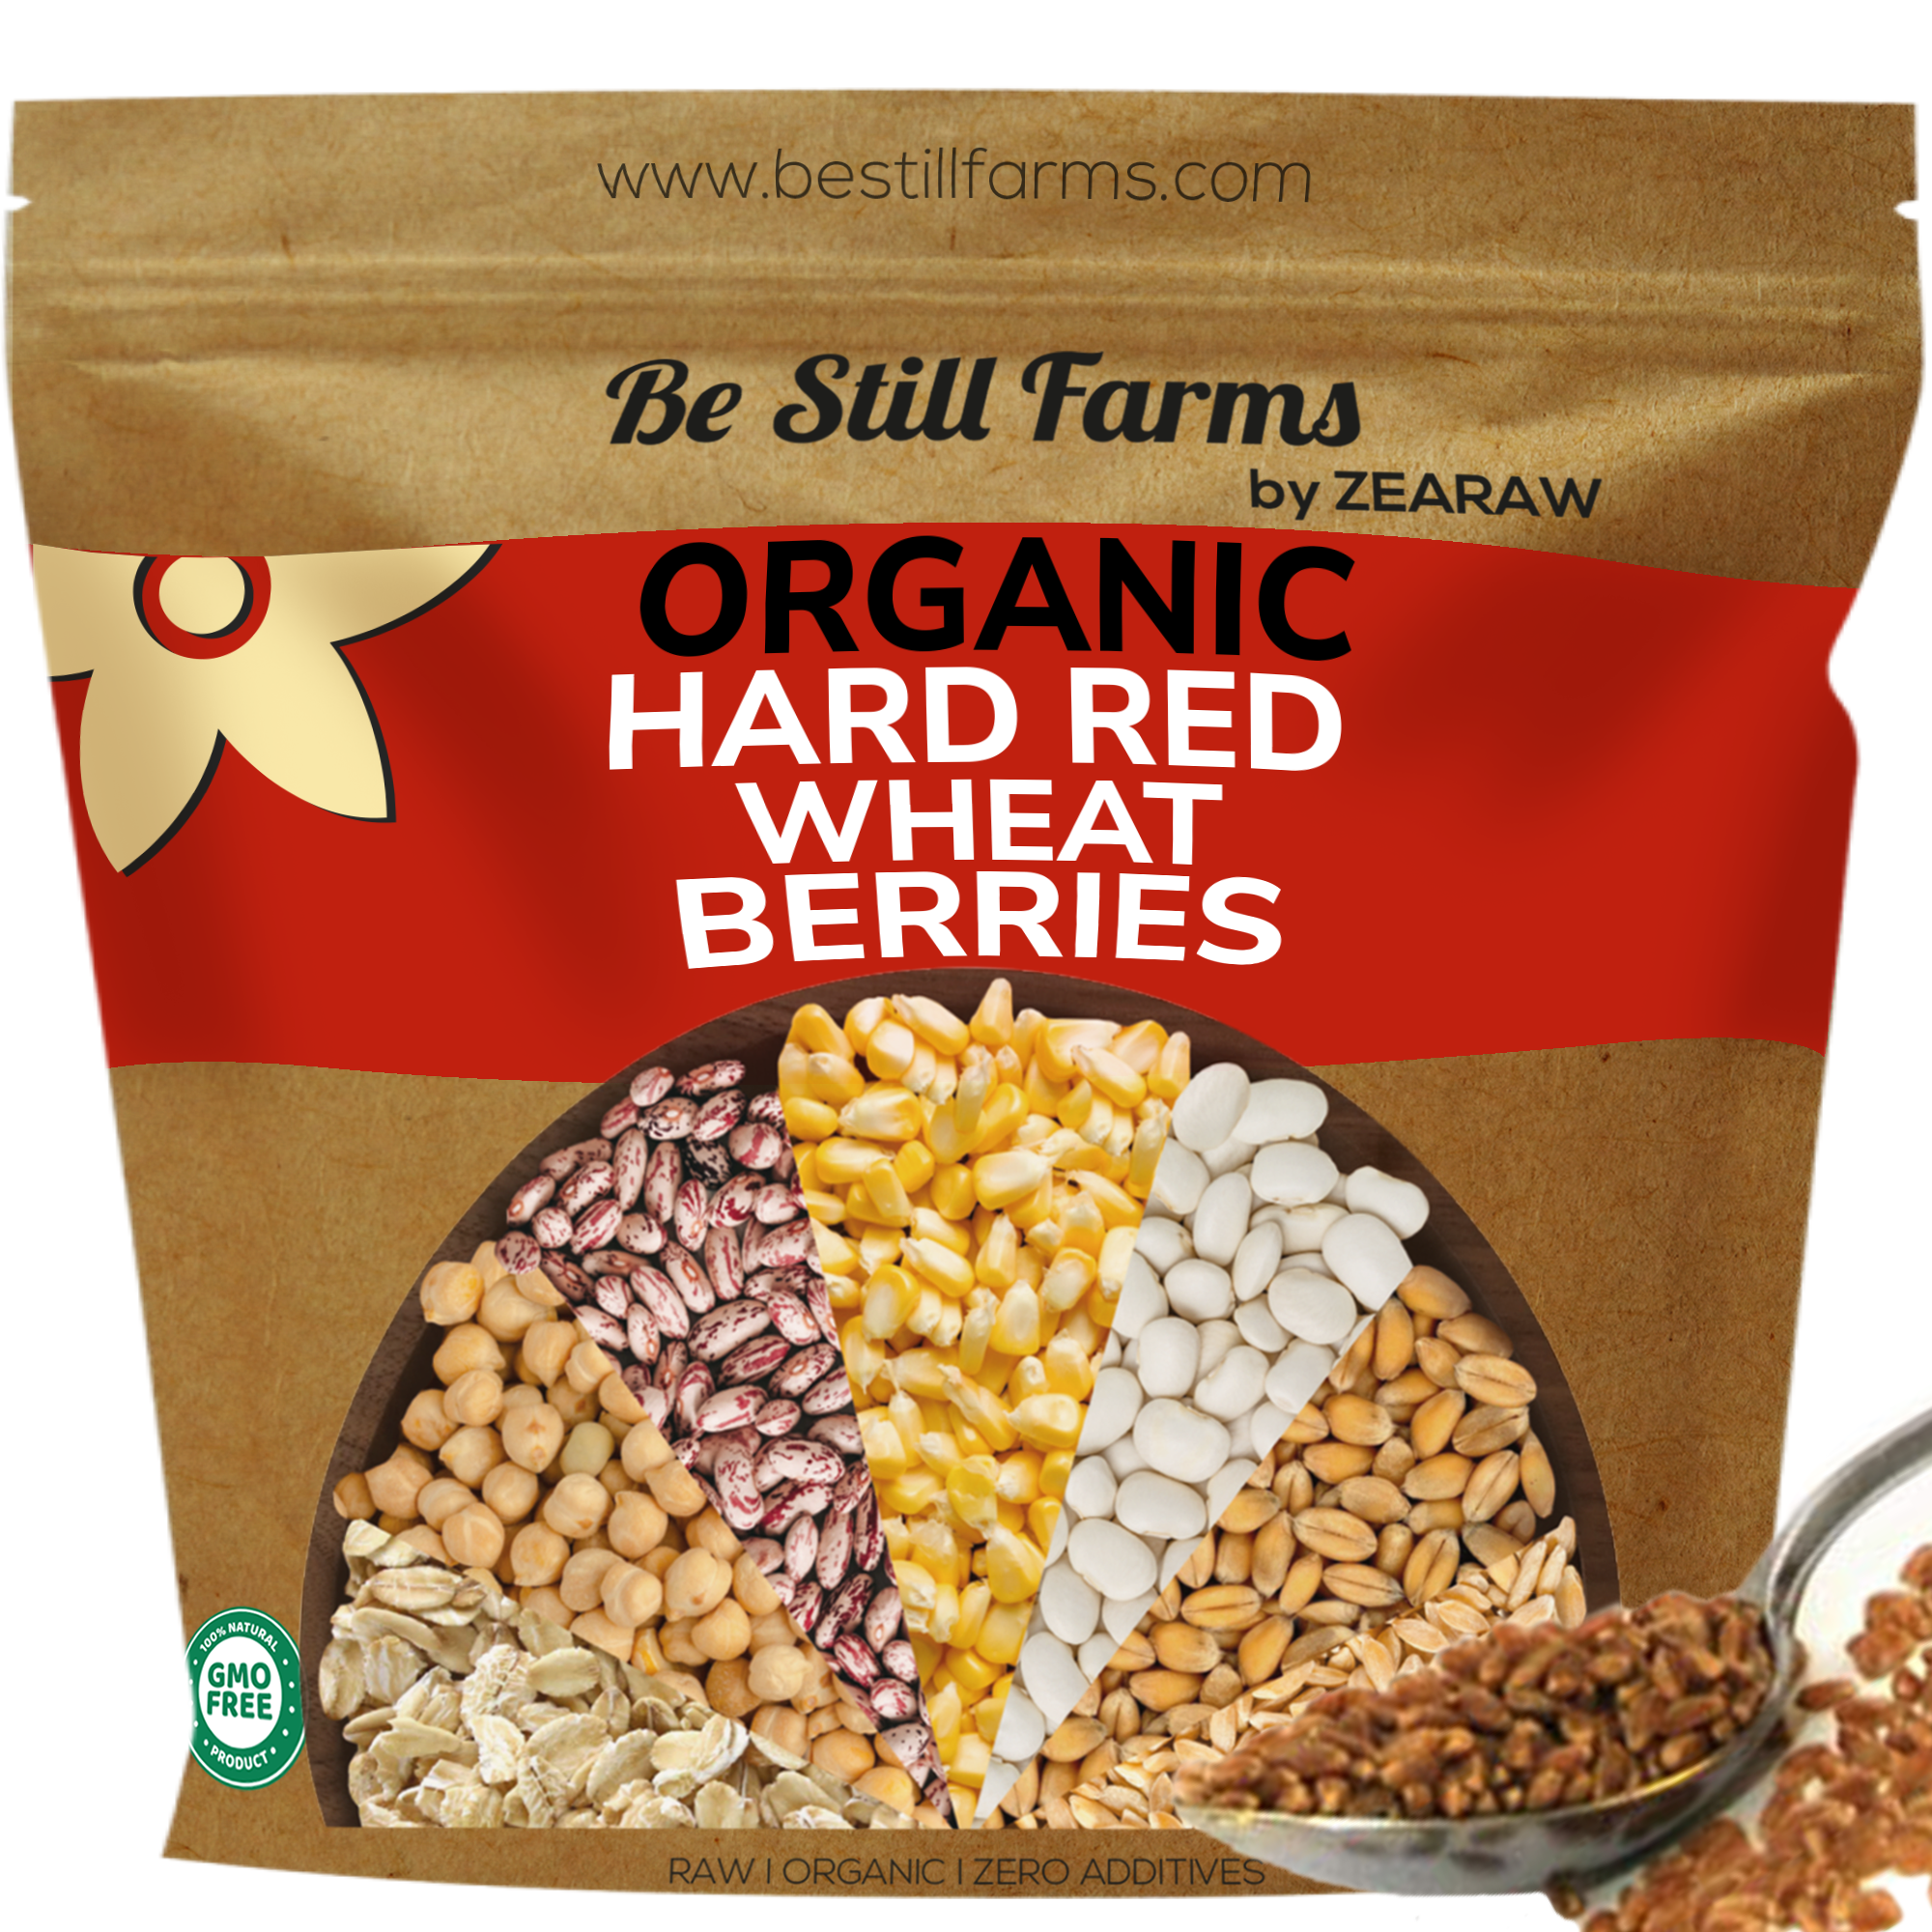 Organic Hard Red Wheat Berries - Be Still Farms